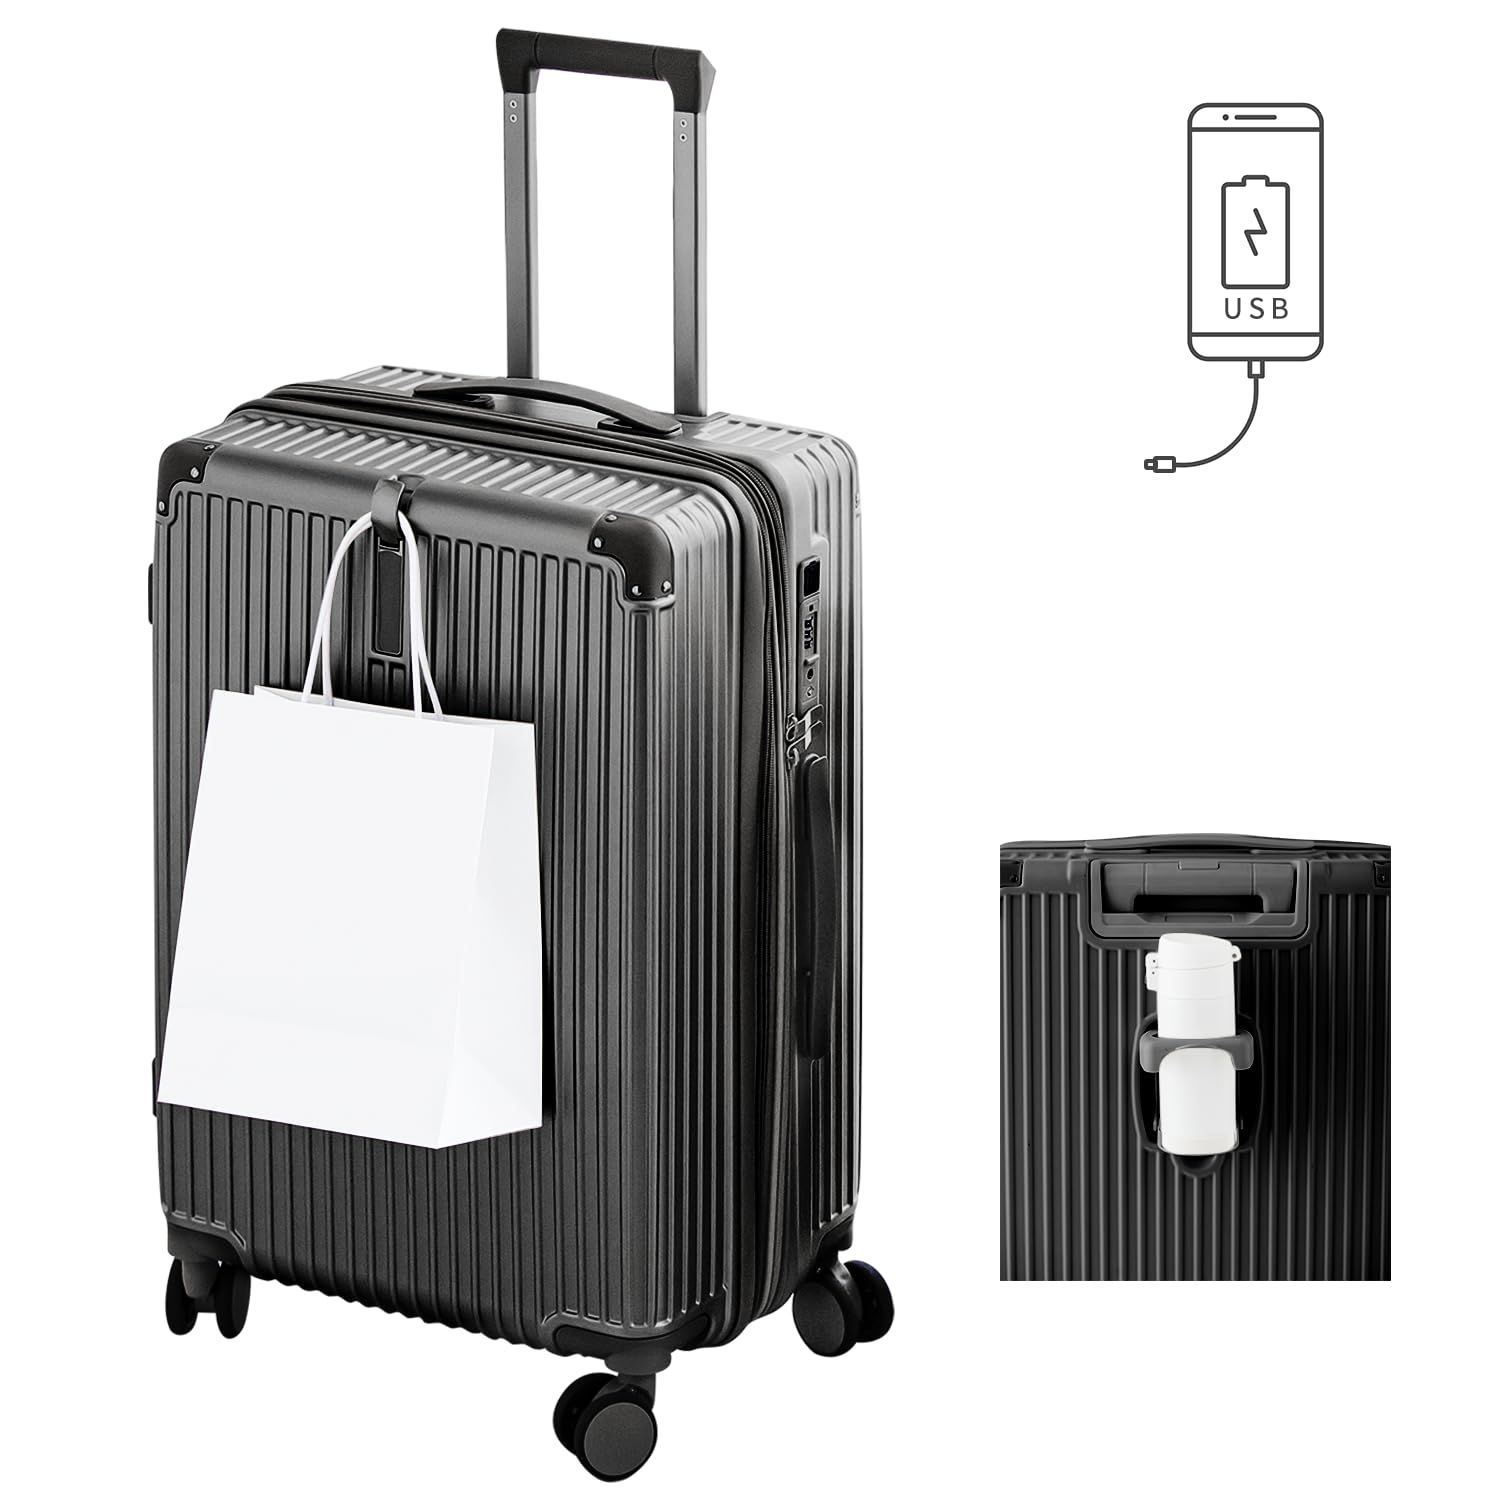 Venzoza] キャリーケース 機内持ち込み 多機能 スーツケース sサイズ